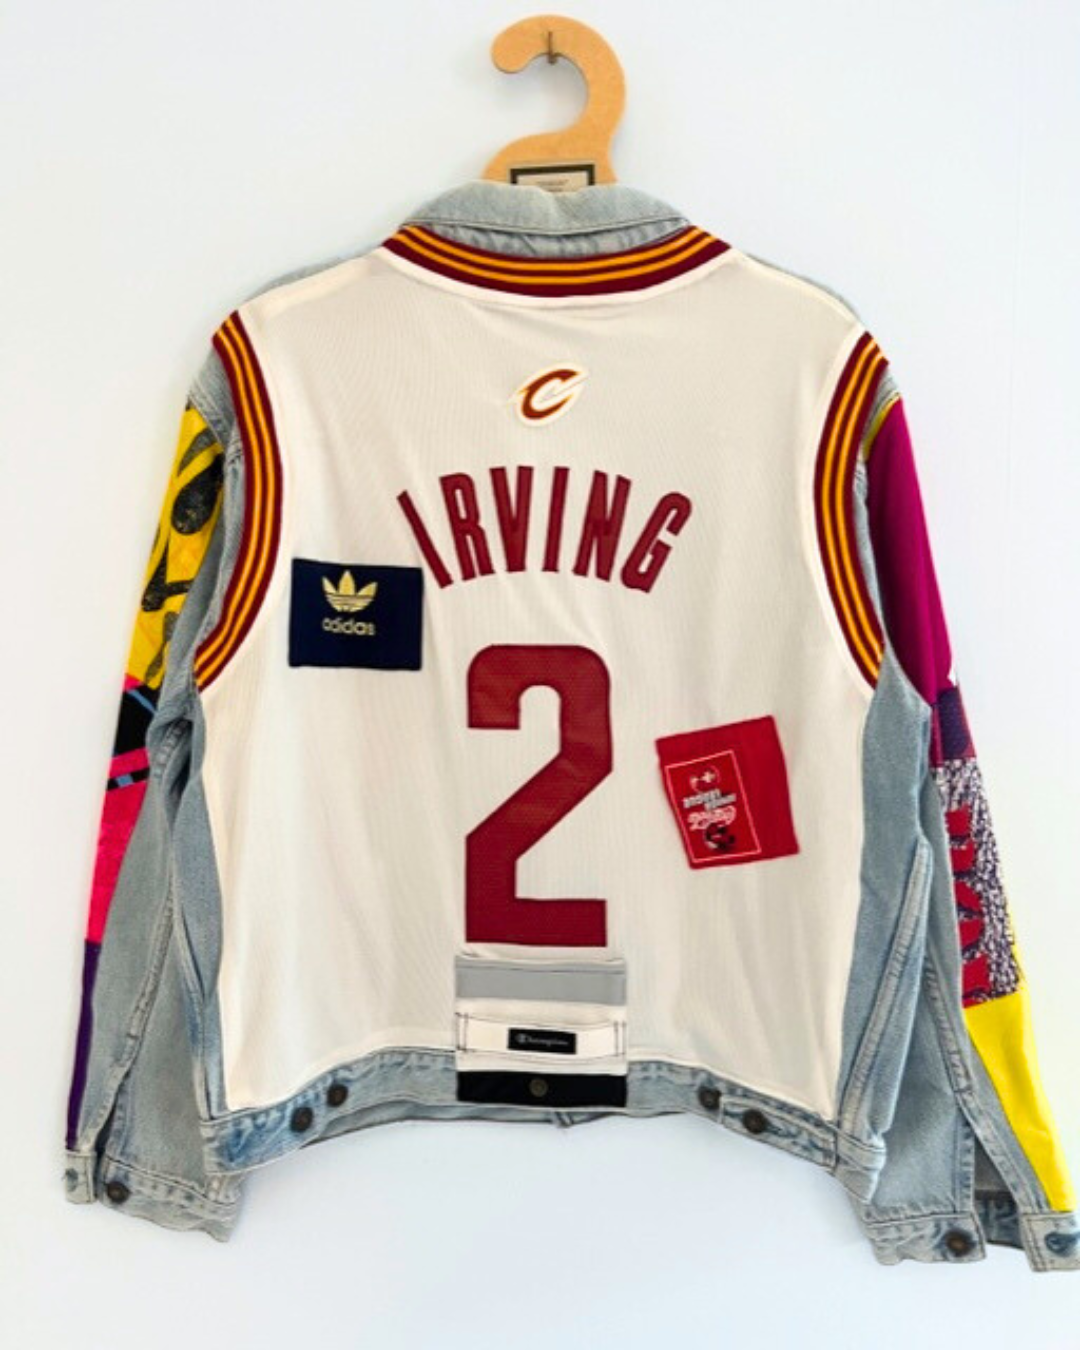 Vintage LEVIS Denim Trucker Jacket with Basketball Jersey back and vintage sportswear panelling